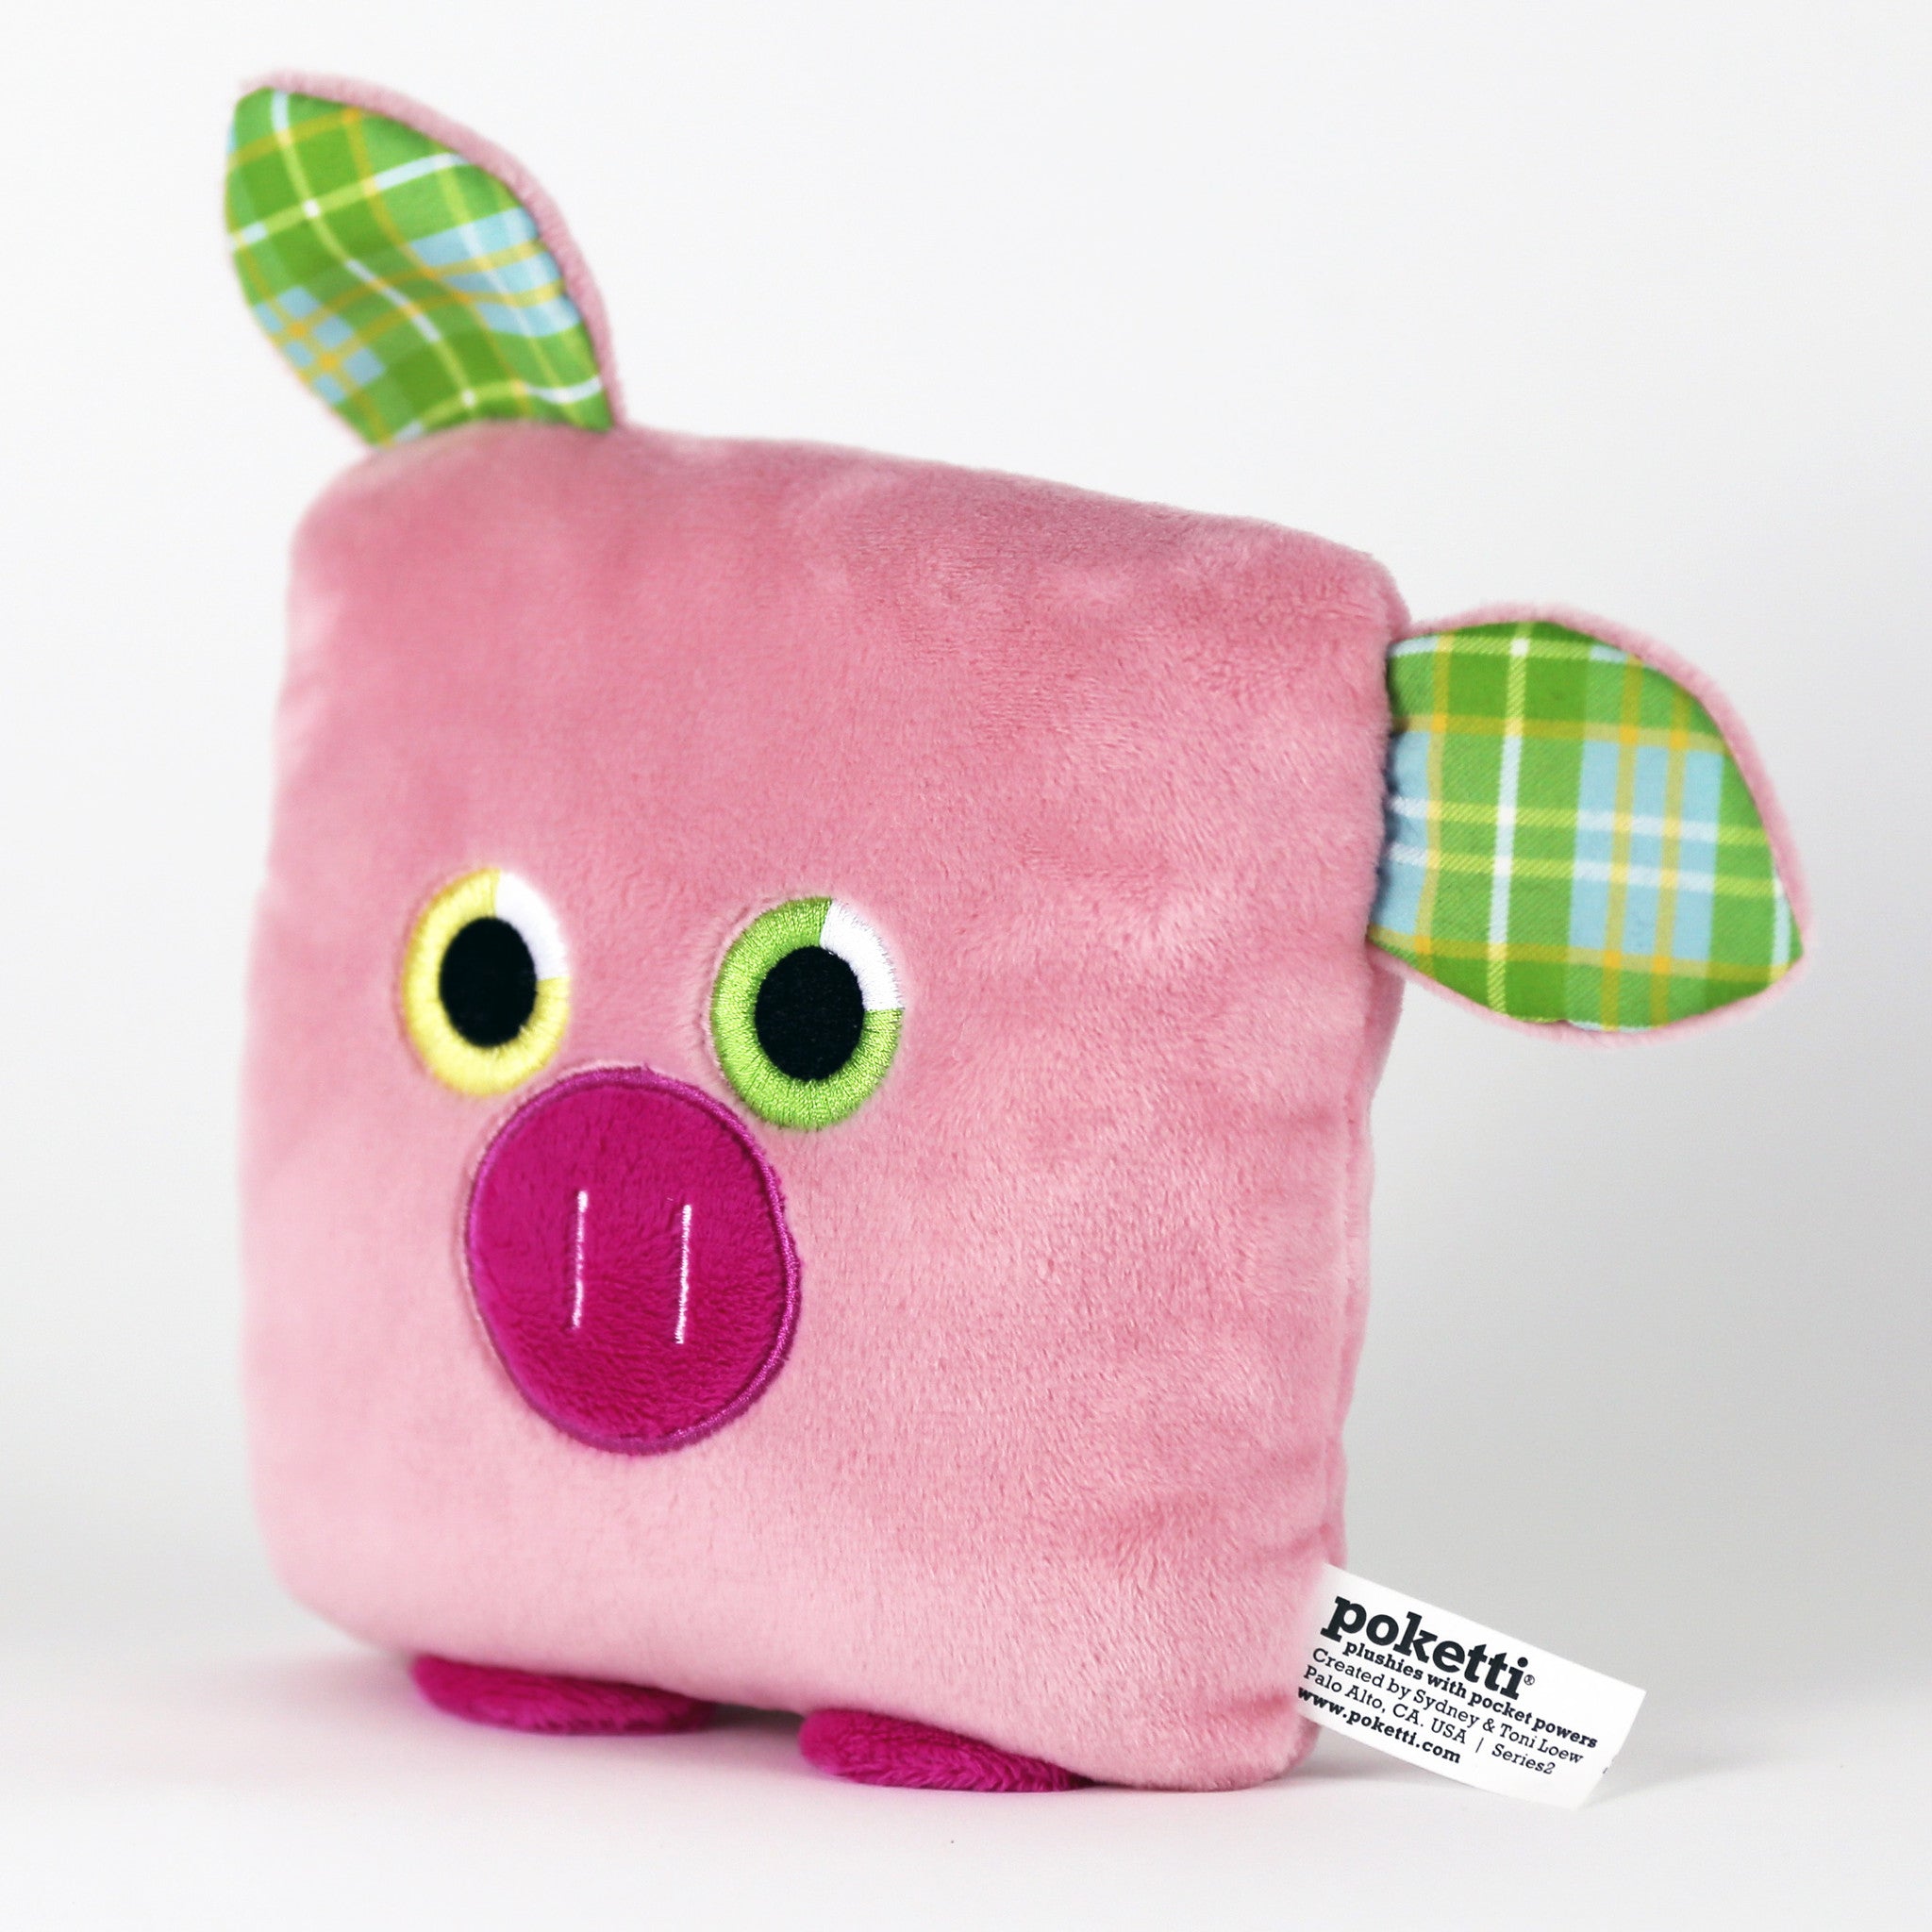 Plush toy pig stuffed animal with a useful back pocket